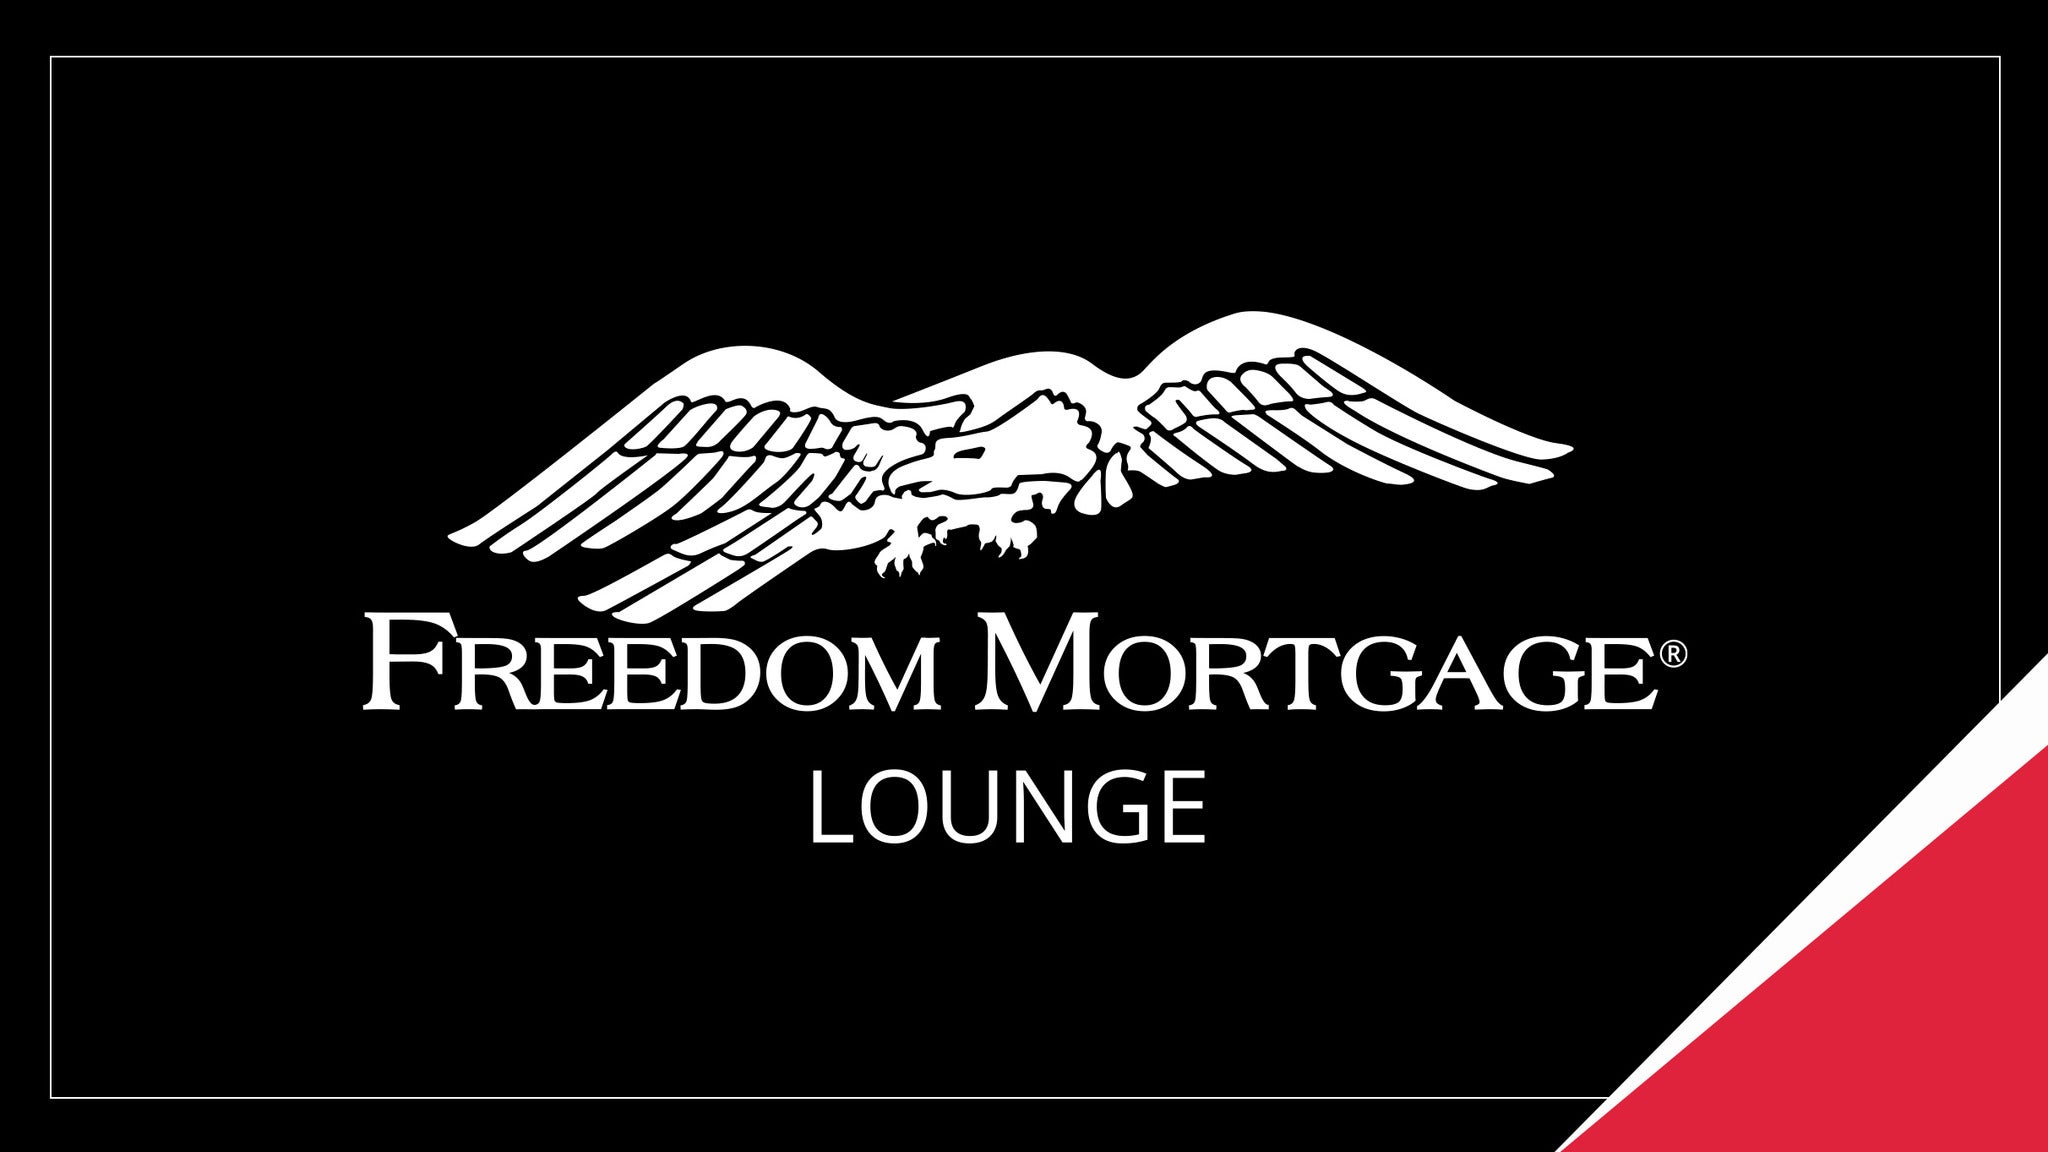 Freedom Mortgage Lounge presale information on freepresalepasswords.com